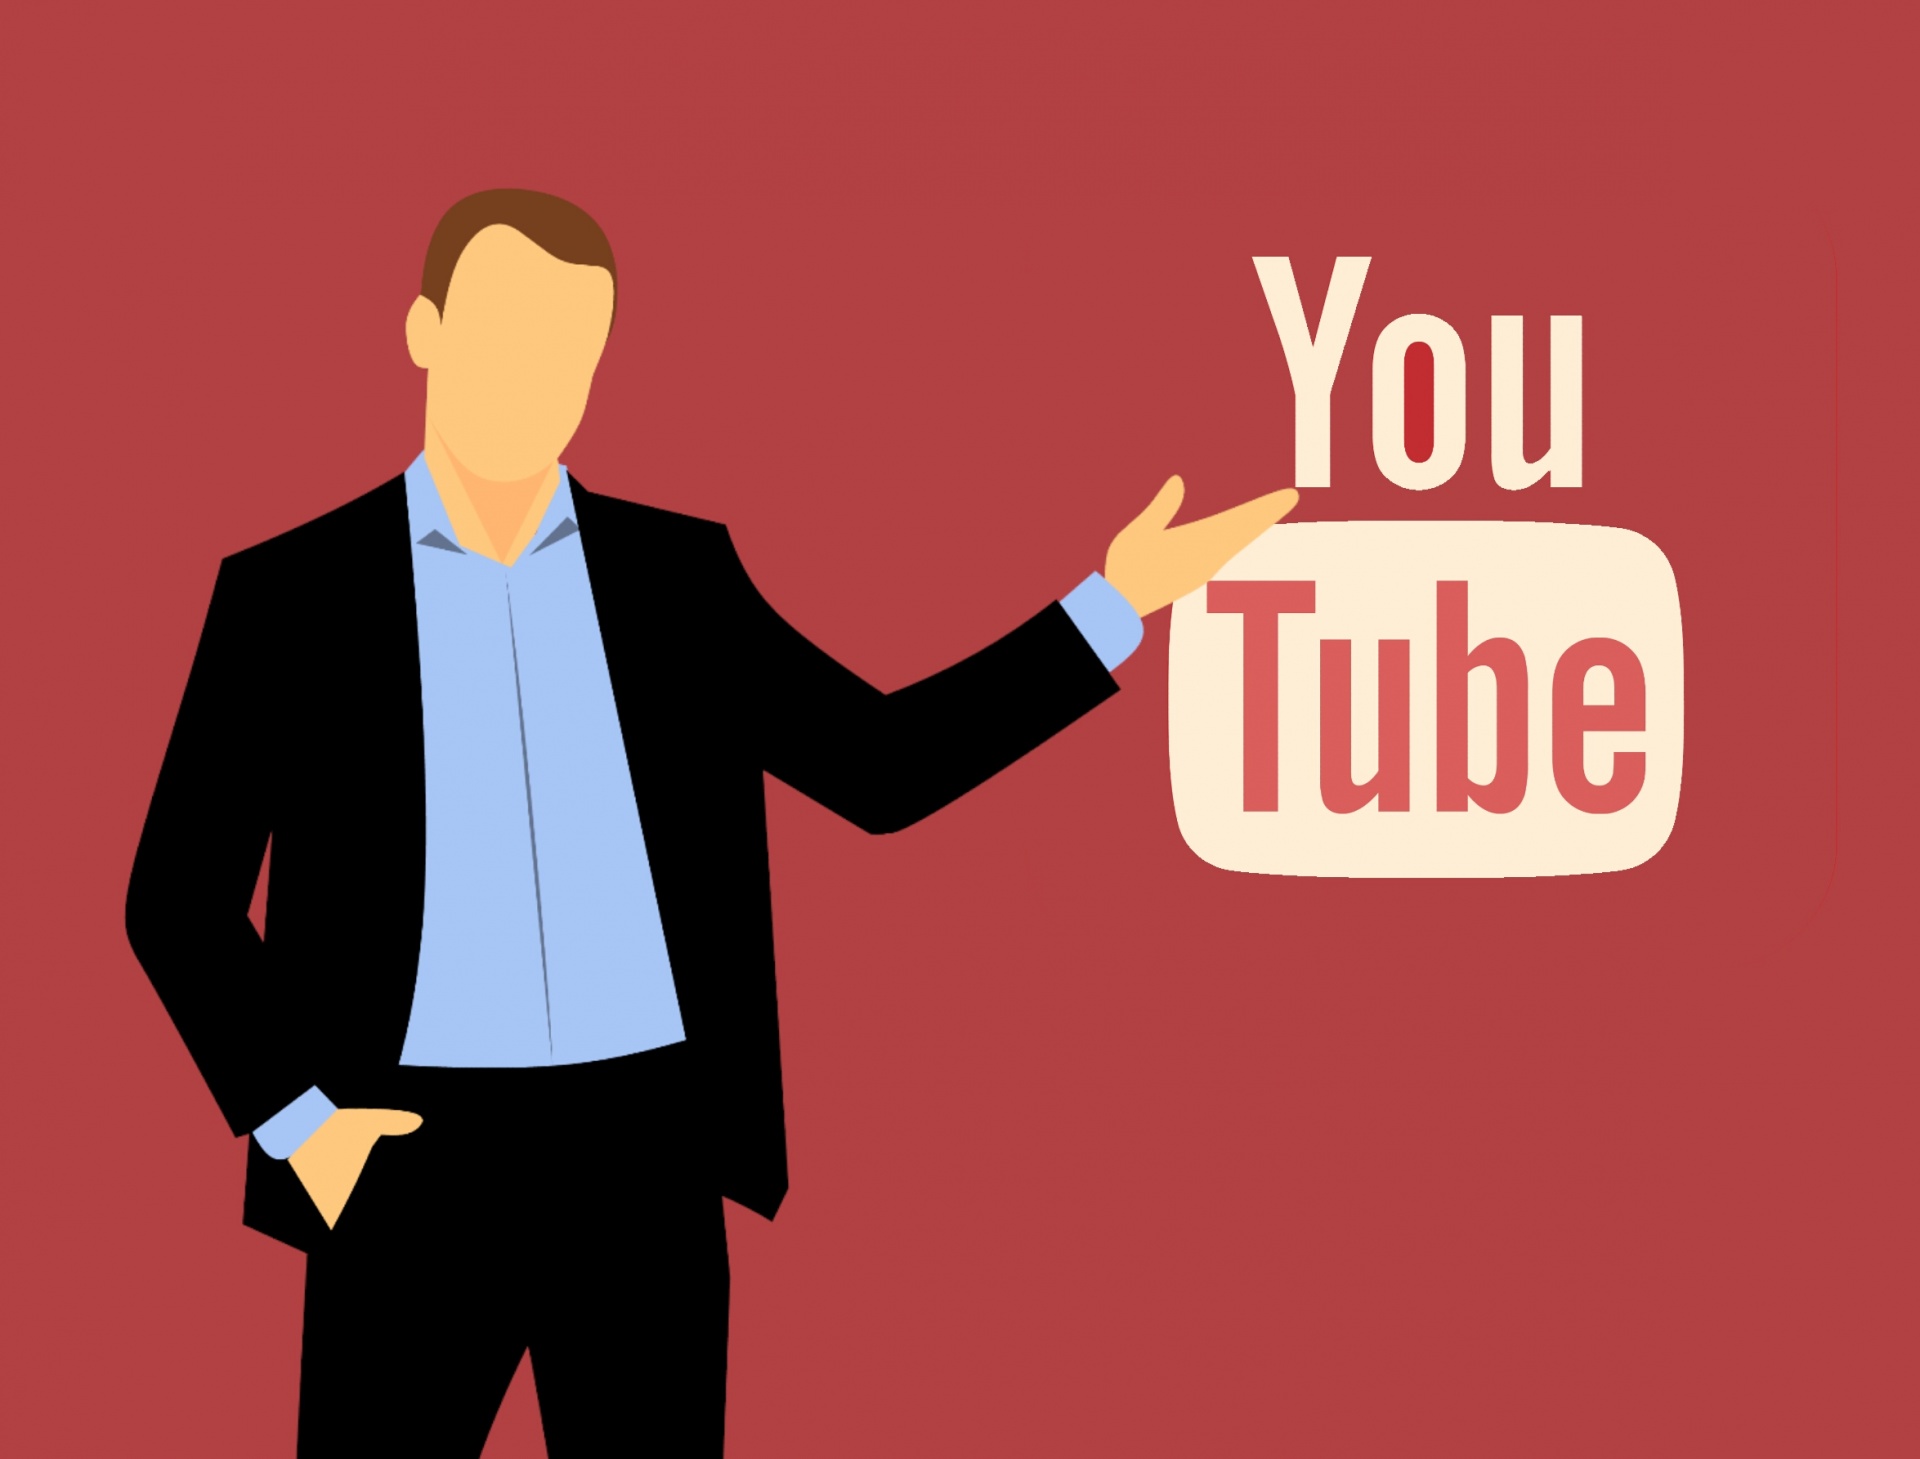 Youtube-pictogram, logo youtube, sociaal